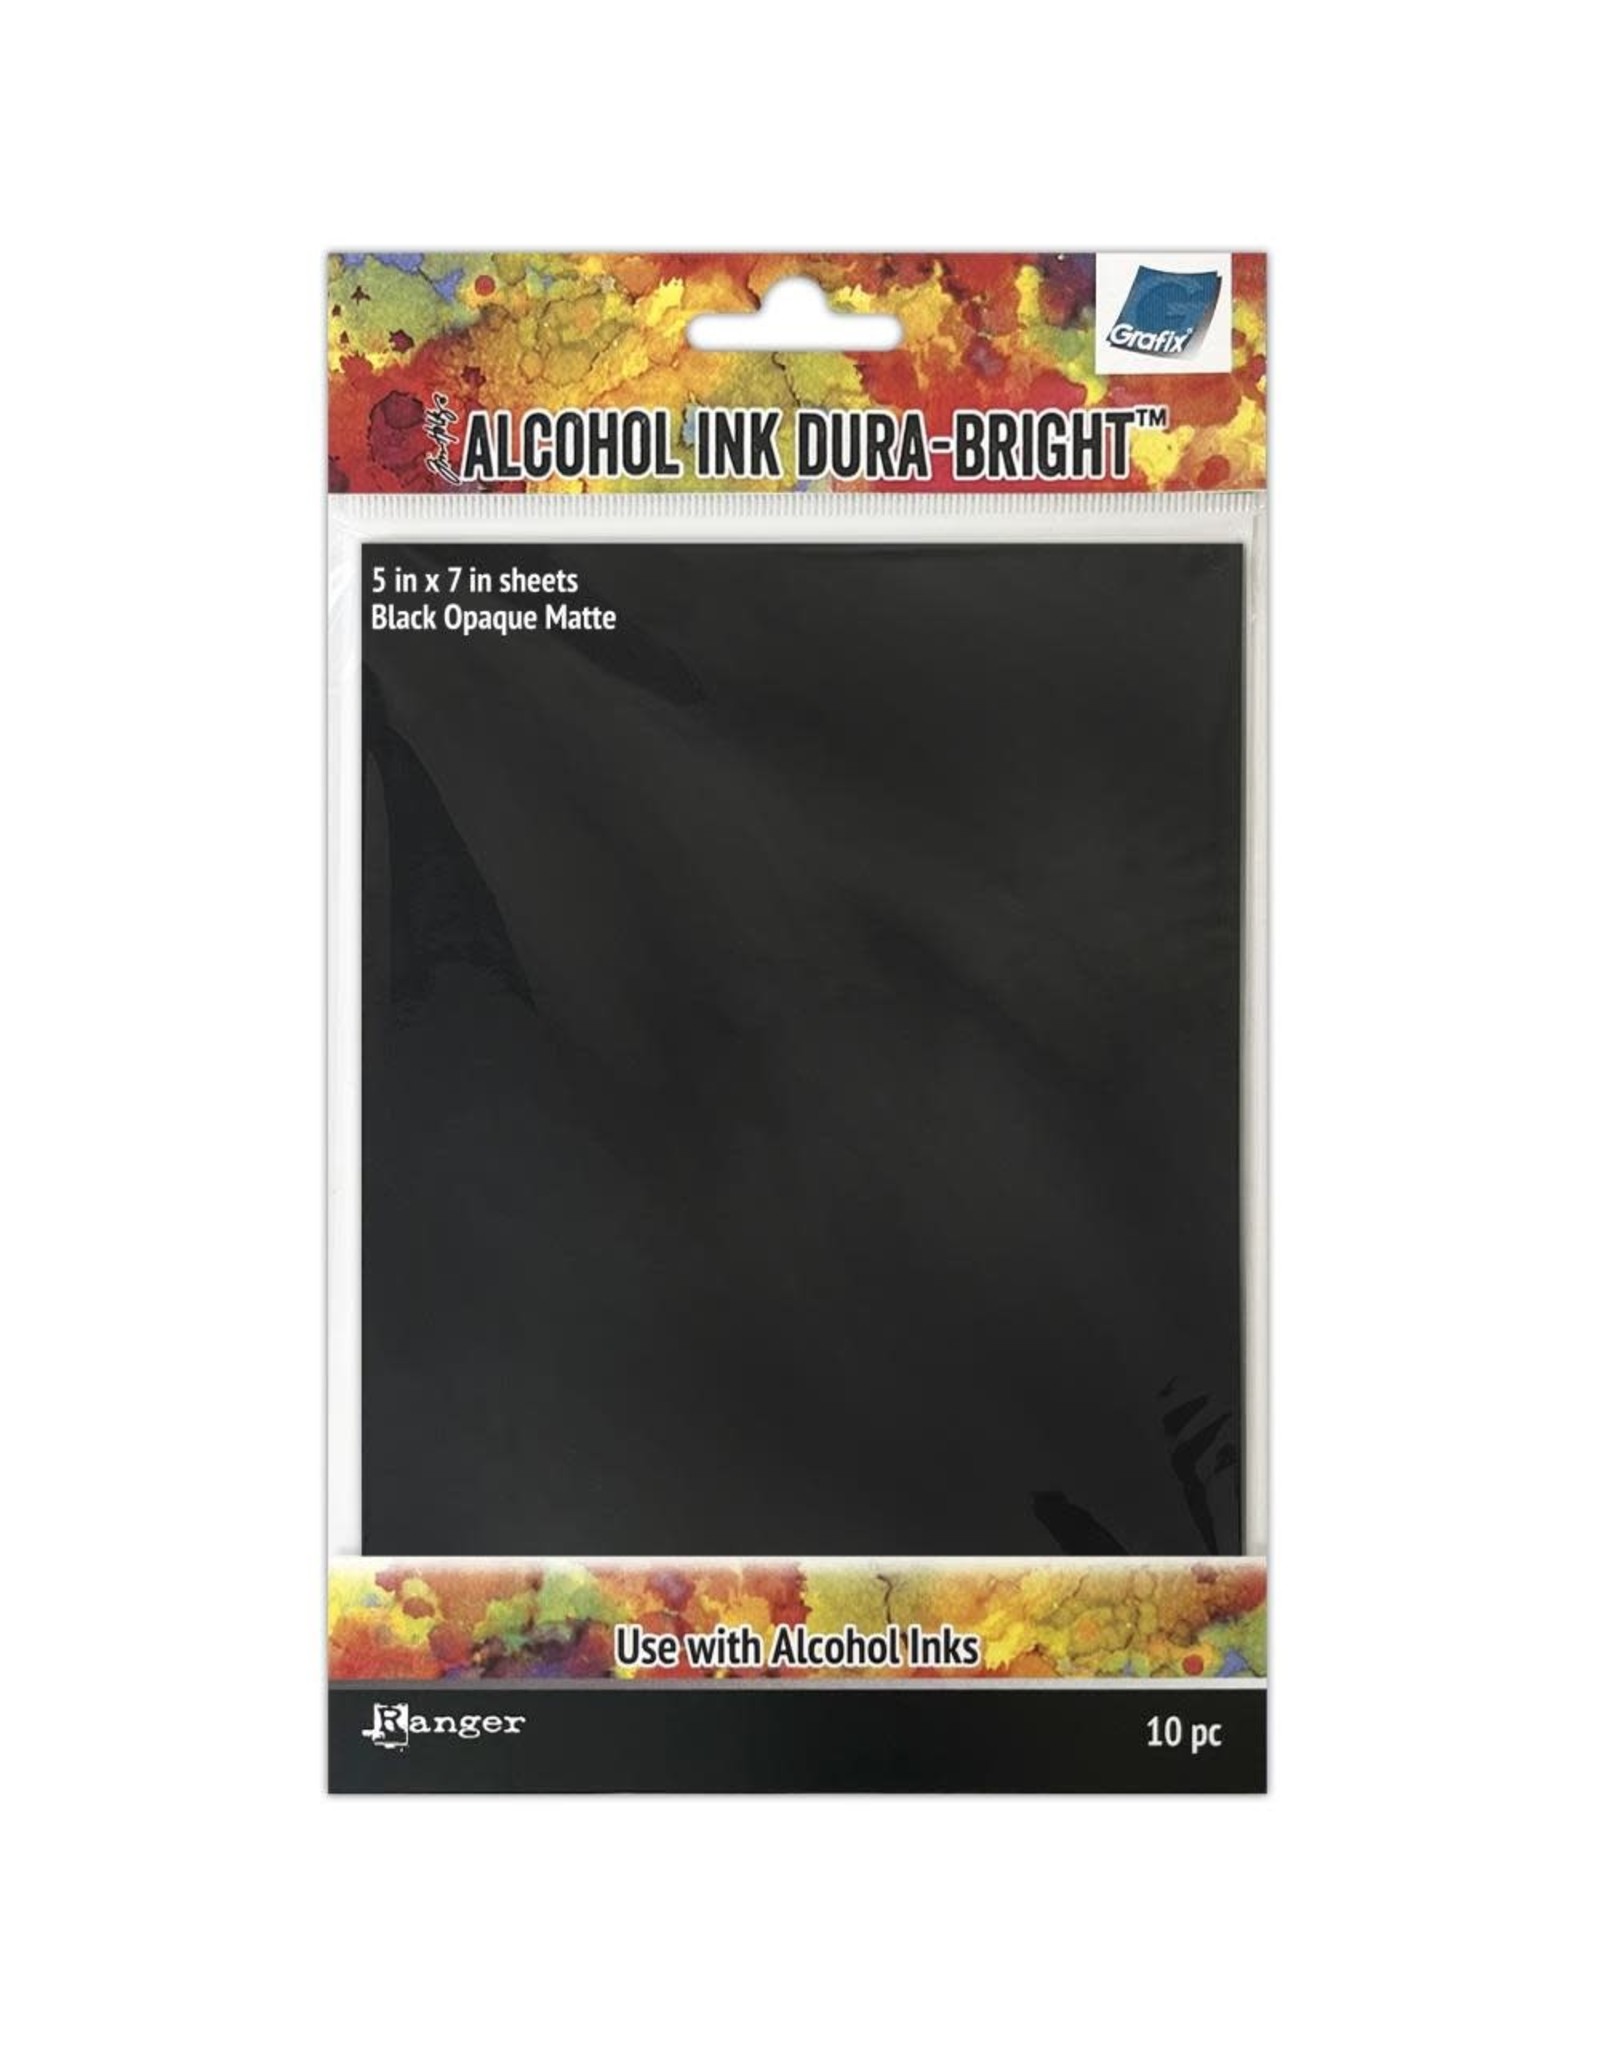 Tim Holtz - Ranger Dura-Bright Black Opaque Matte 5x7 Paper For Alcohol Ink